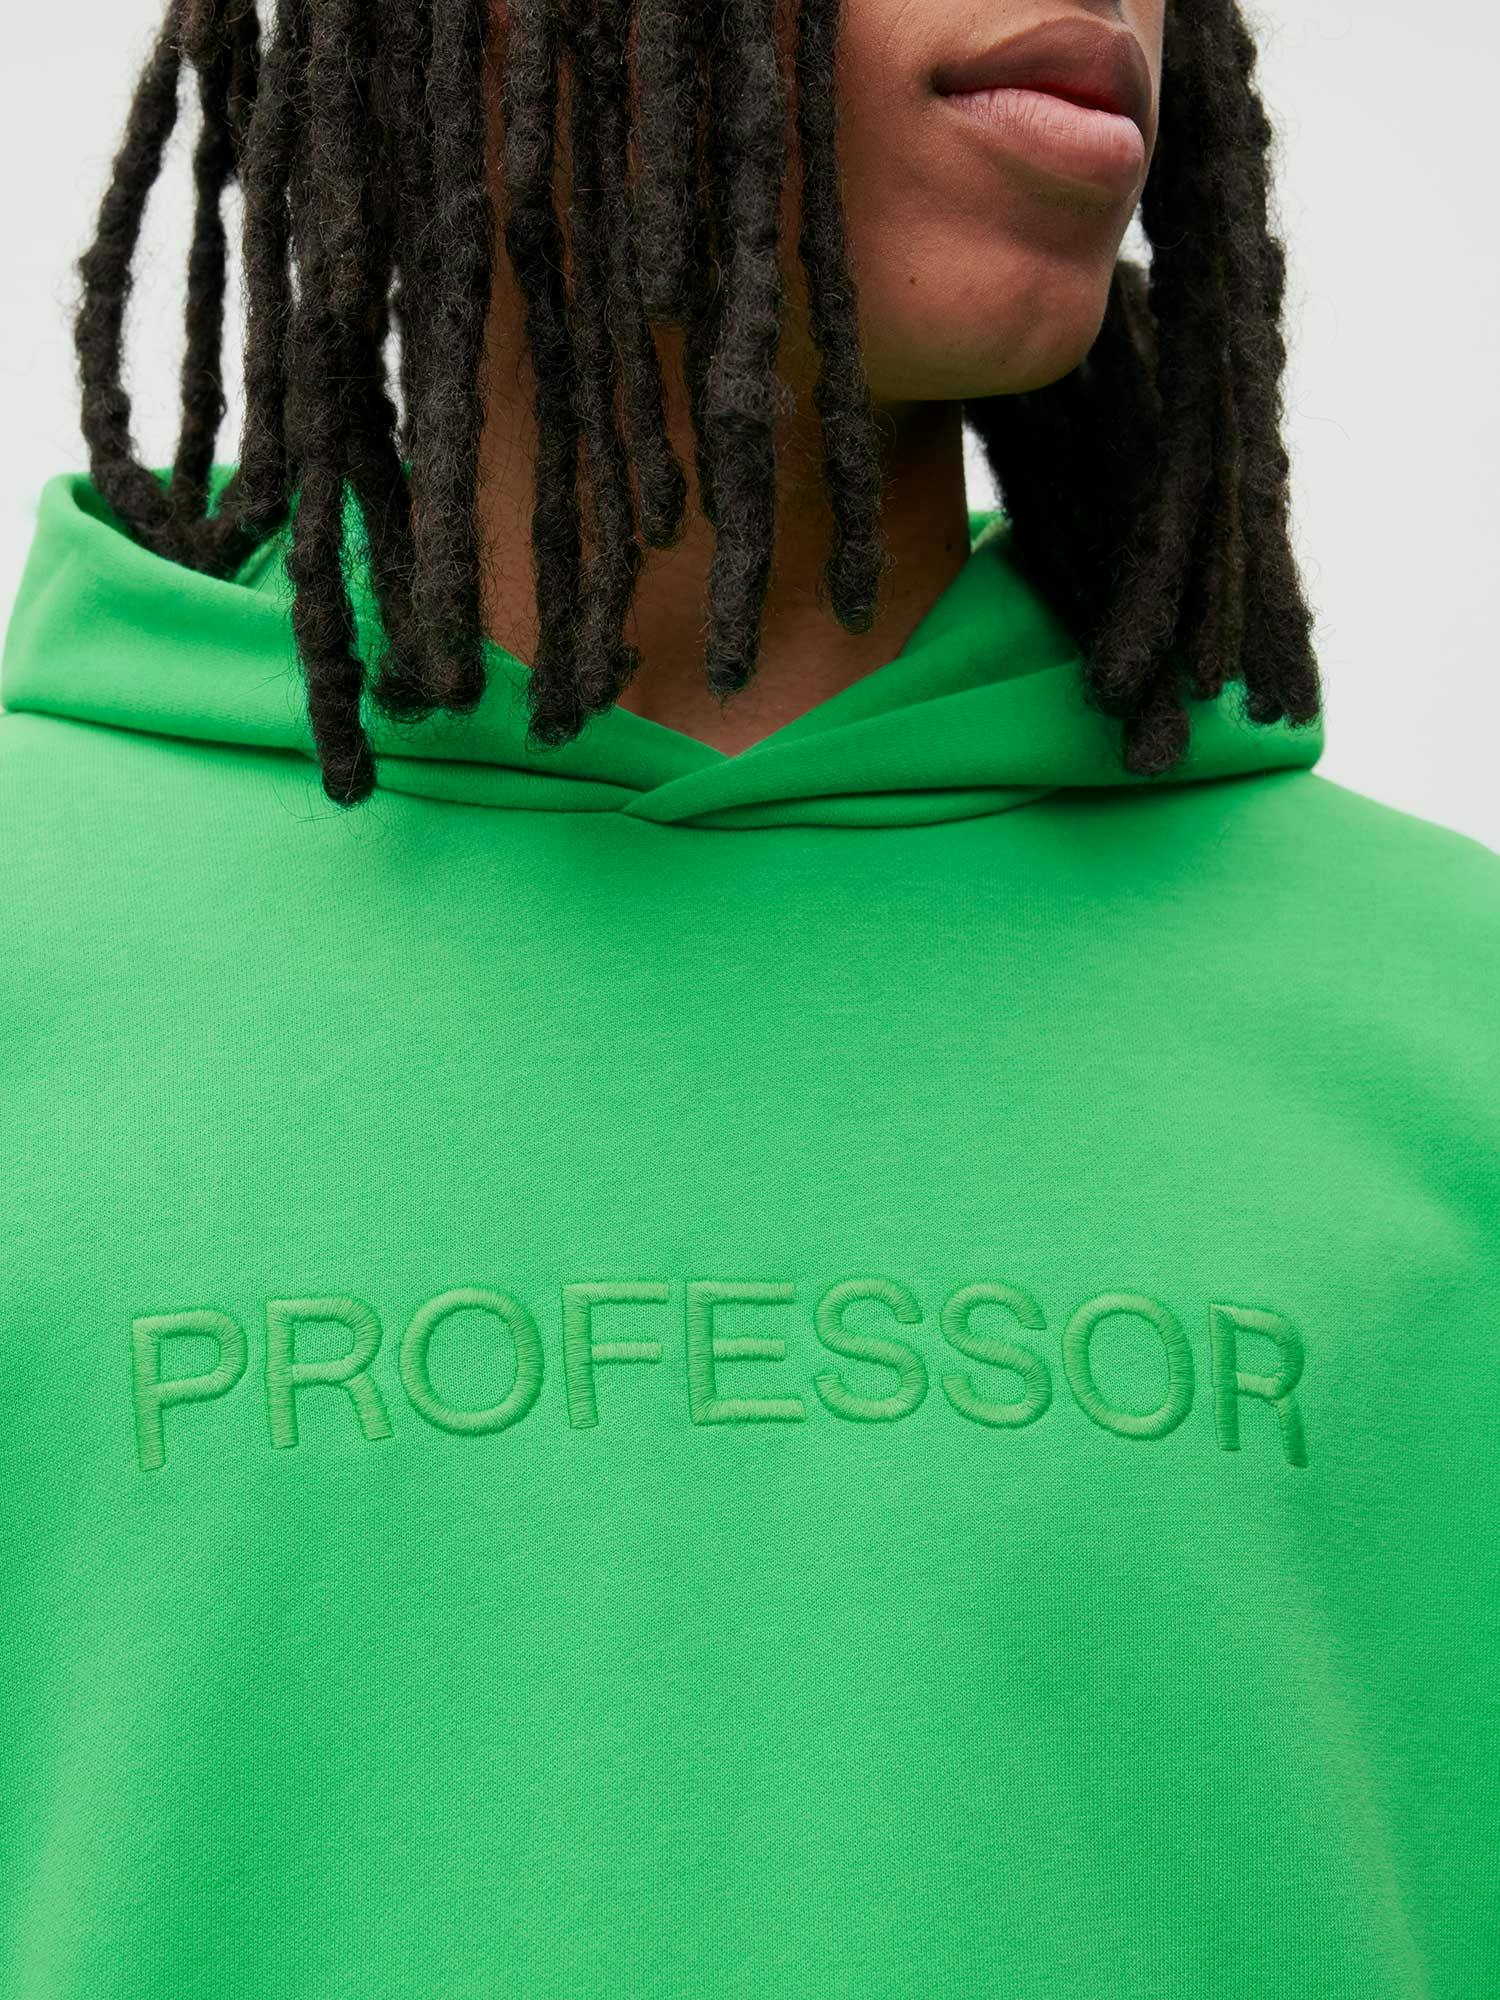 https://cdn.shopify.com/s/files/1/0035/1309/0115/products/Personalities-Professor-Hoodie-Jade-Green-Male-2.jpg?v=1662476070